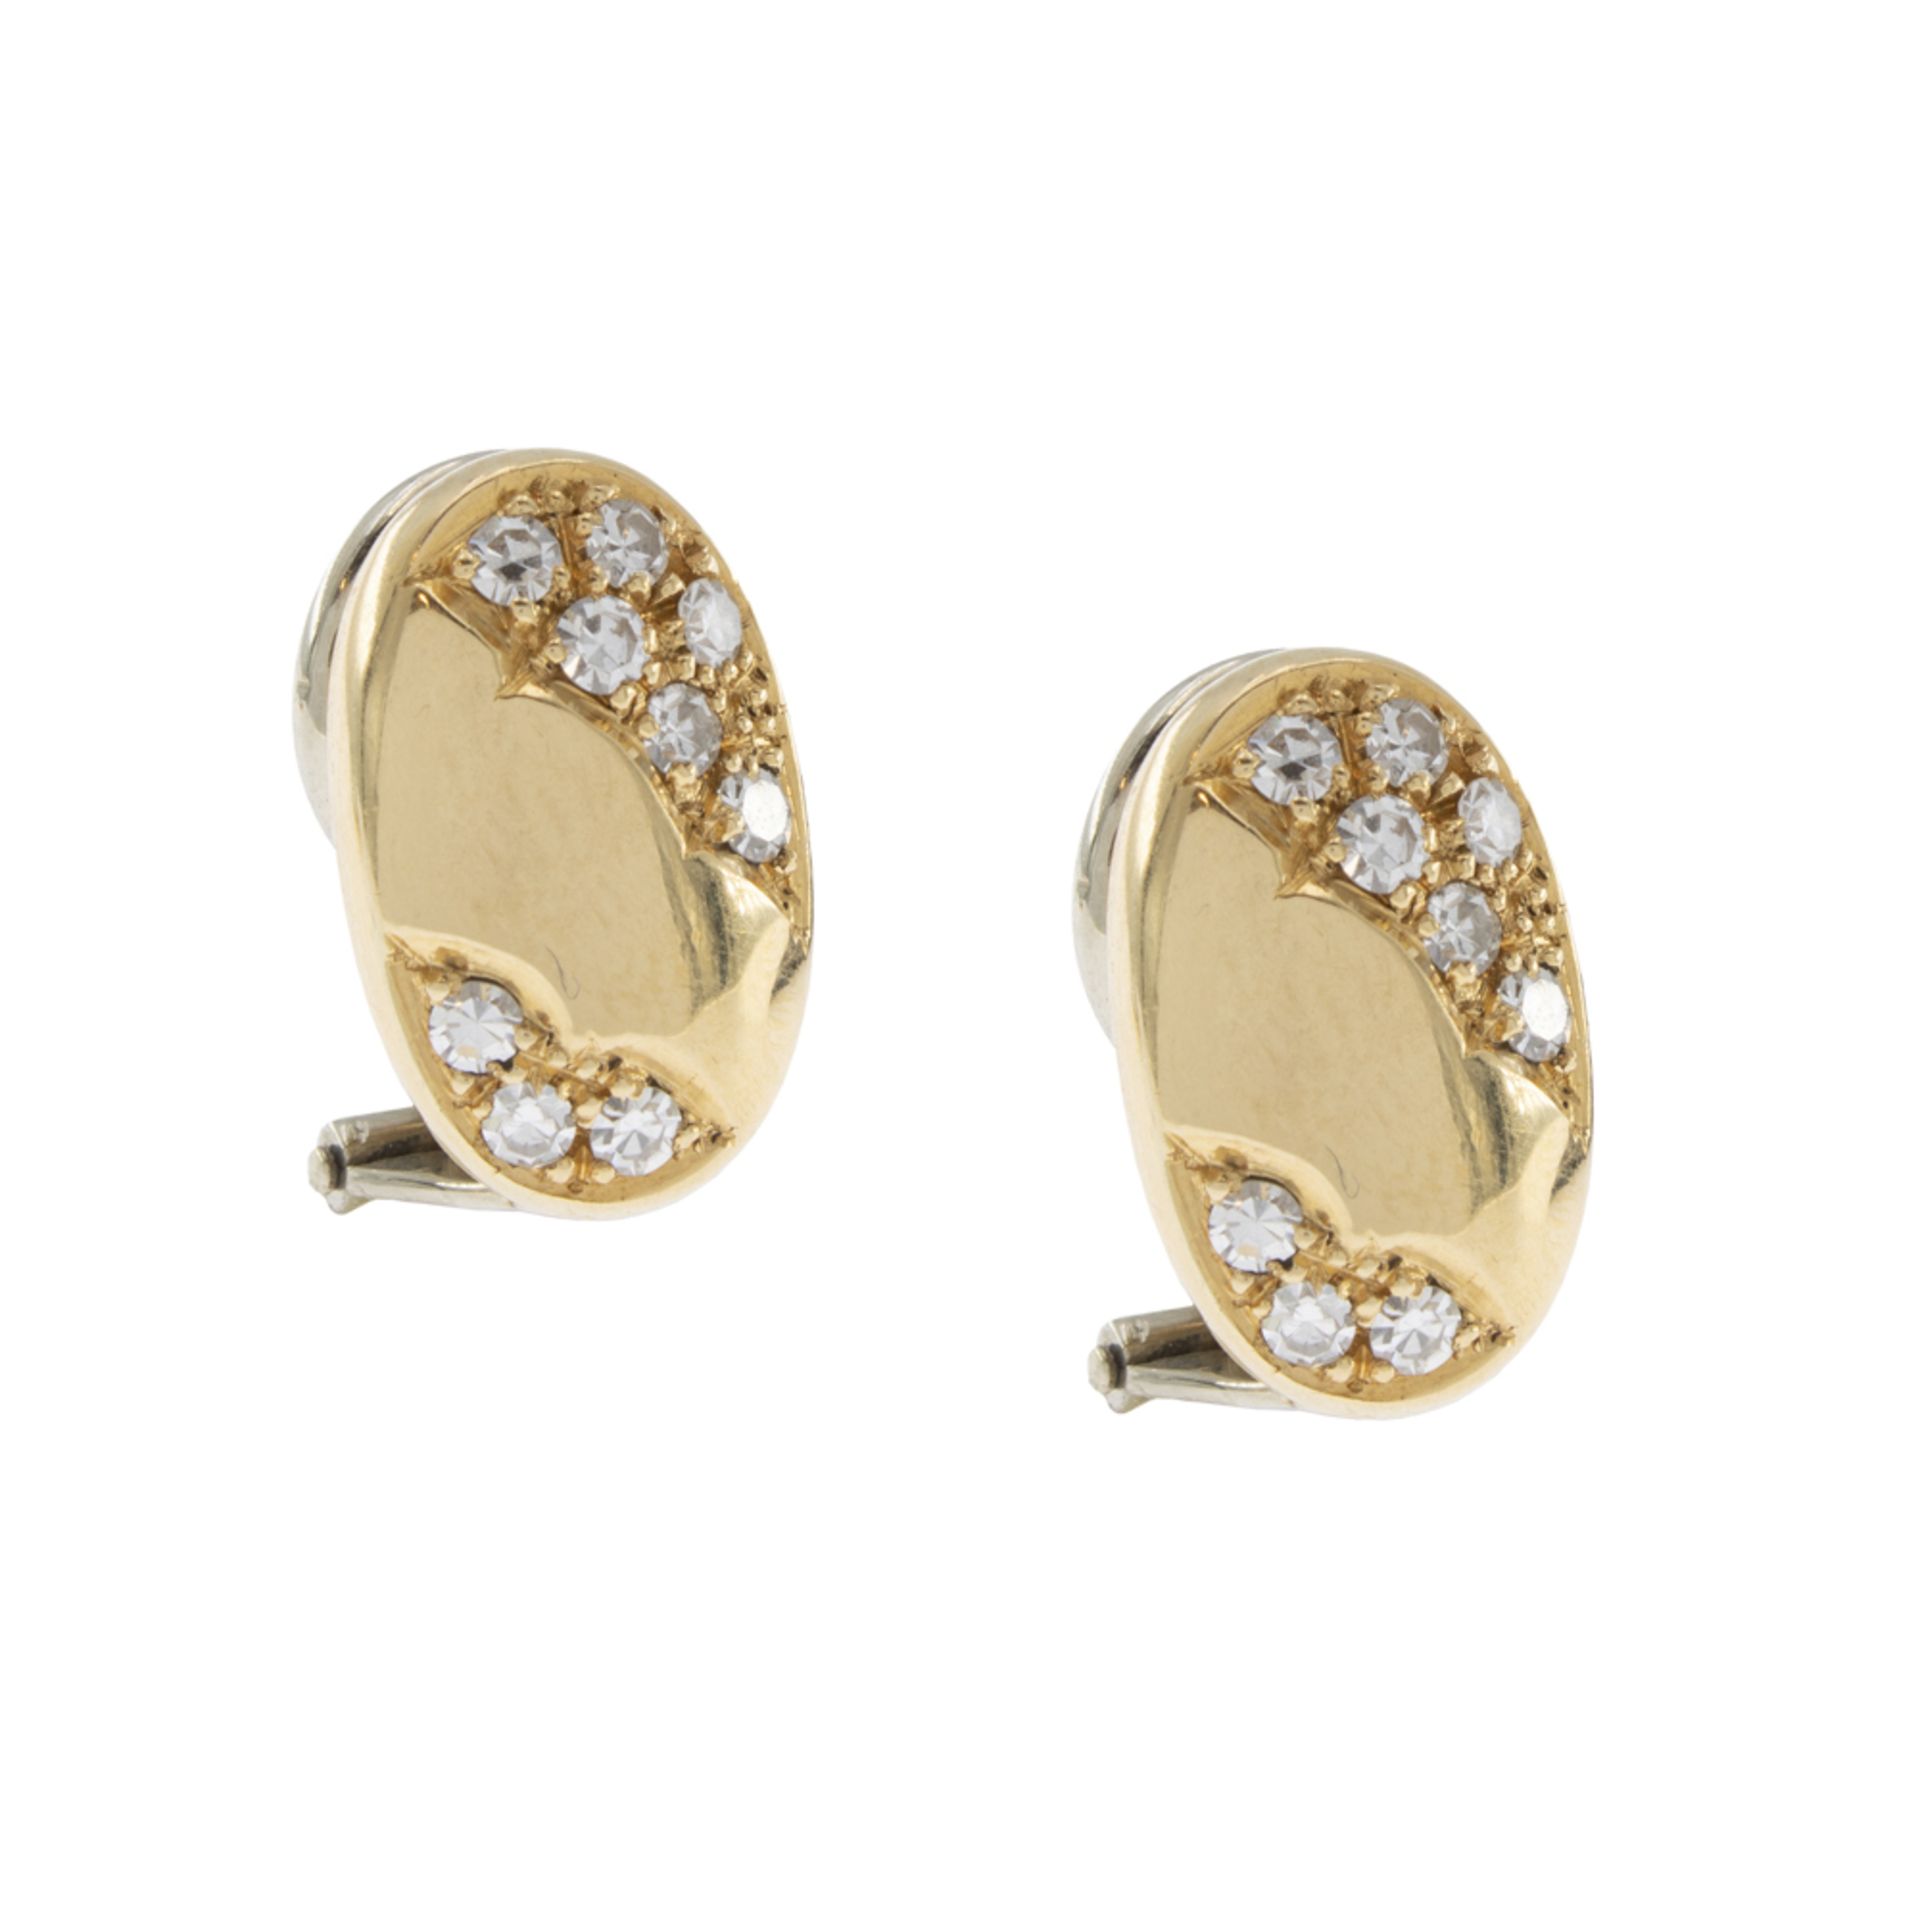 18kt yellow gold and diamonds lobe earrings